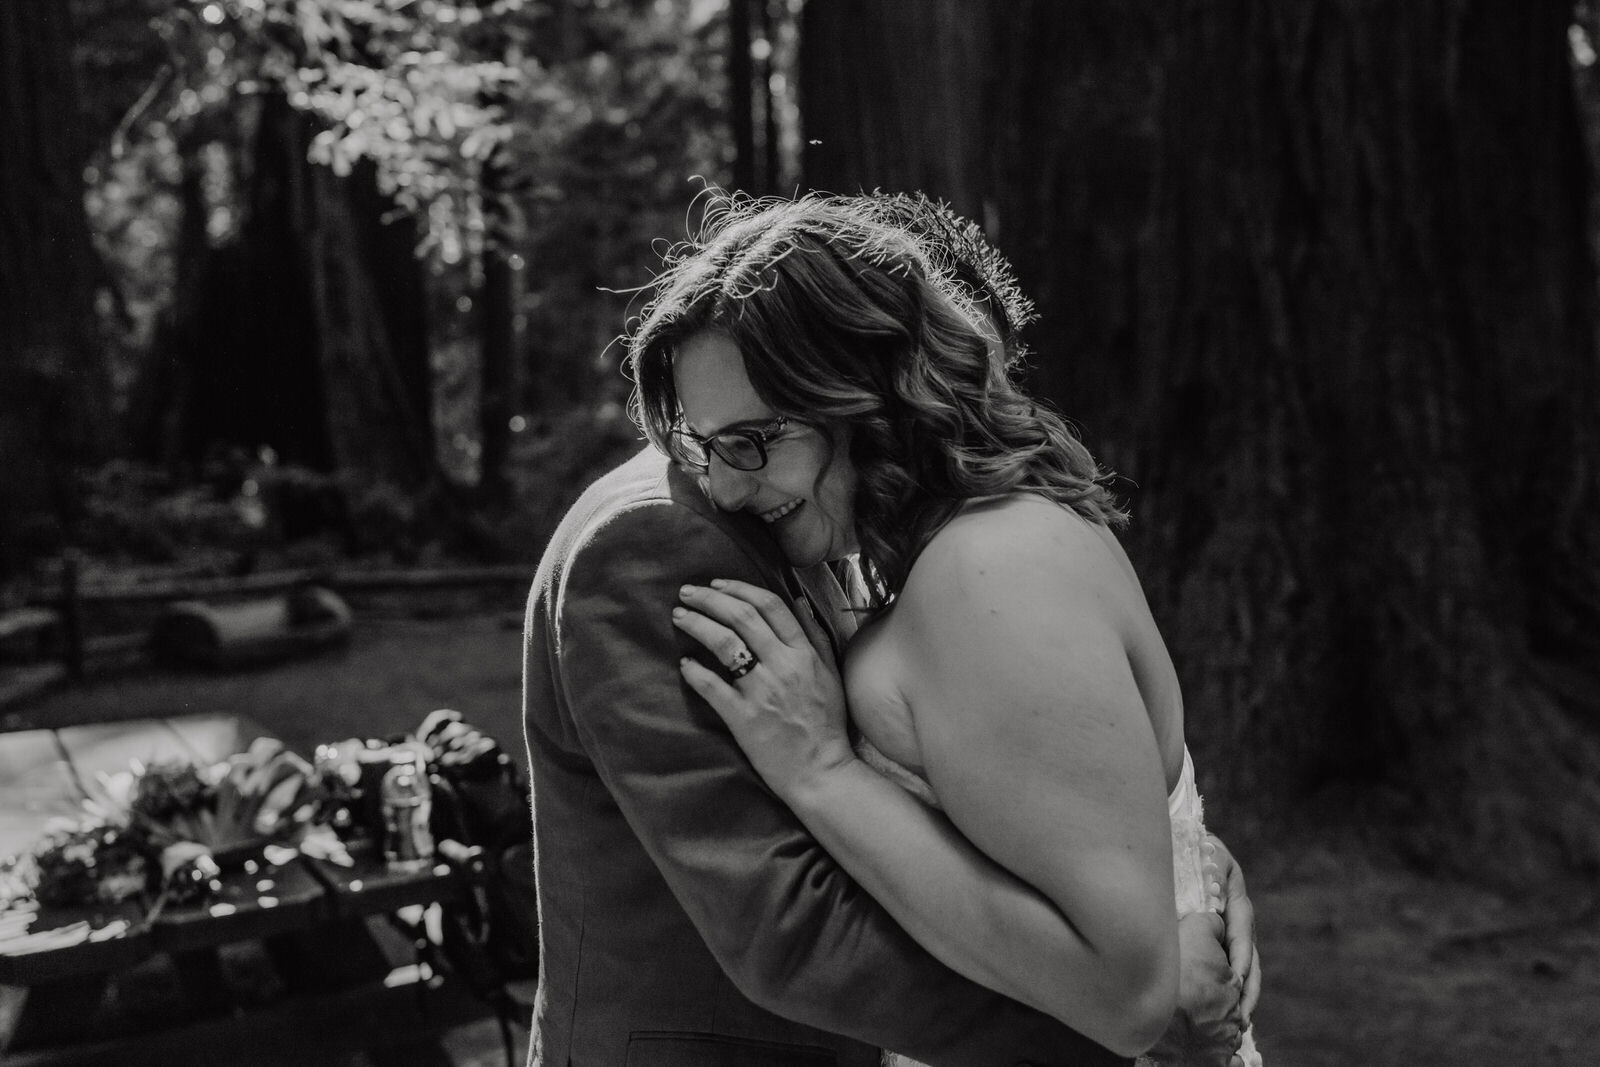 Henry-Cowell-Redwoods-State-Park-Wedding-Santa-Cruz-Black-and-White-Photo-of-Smiling-Bride-in-Glasses.jpg